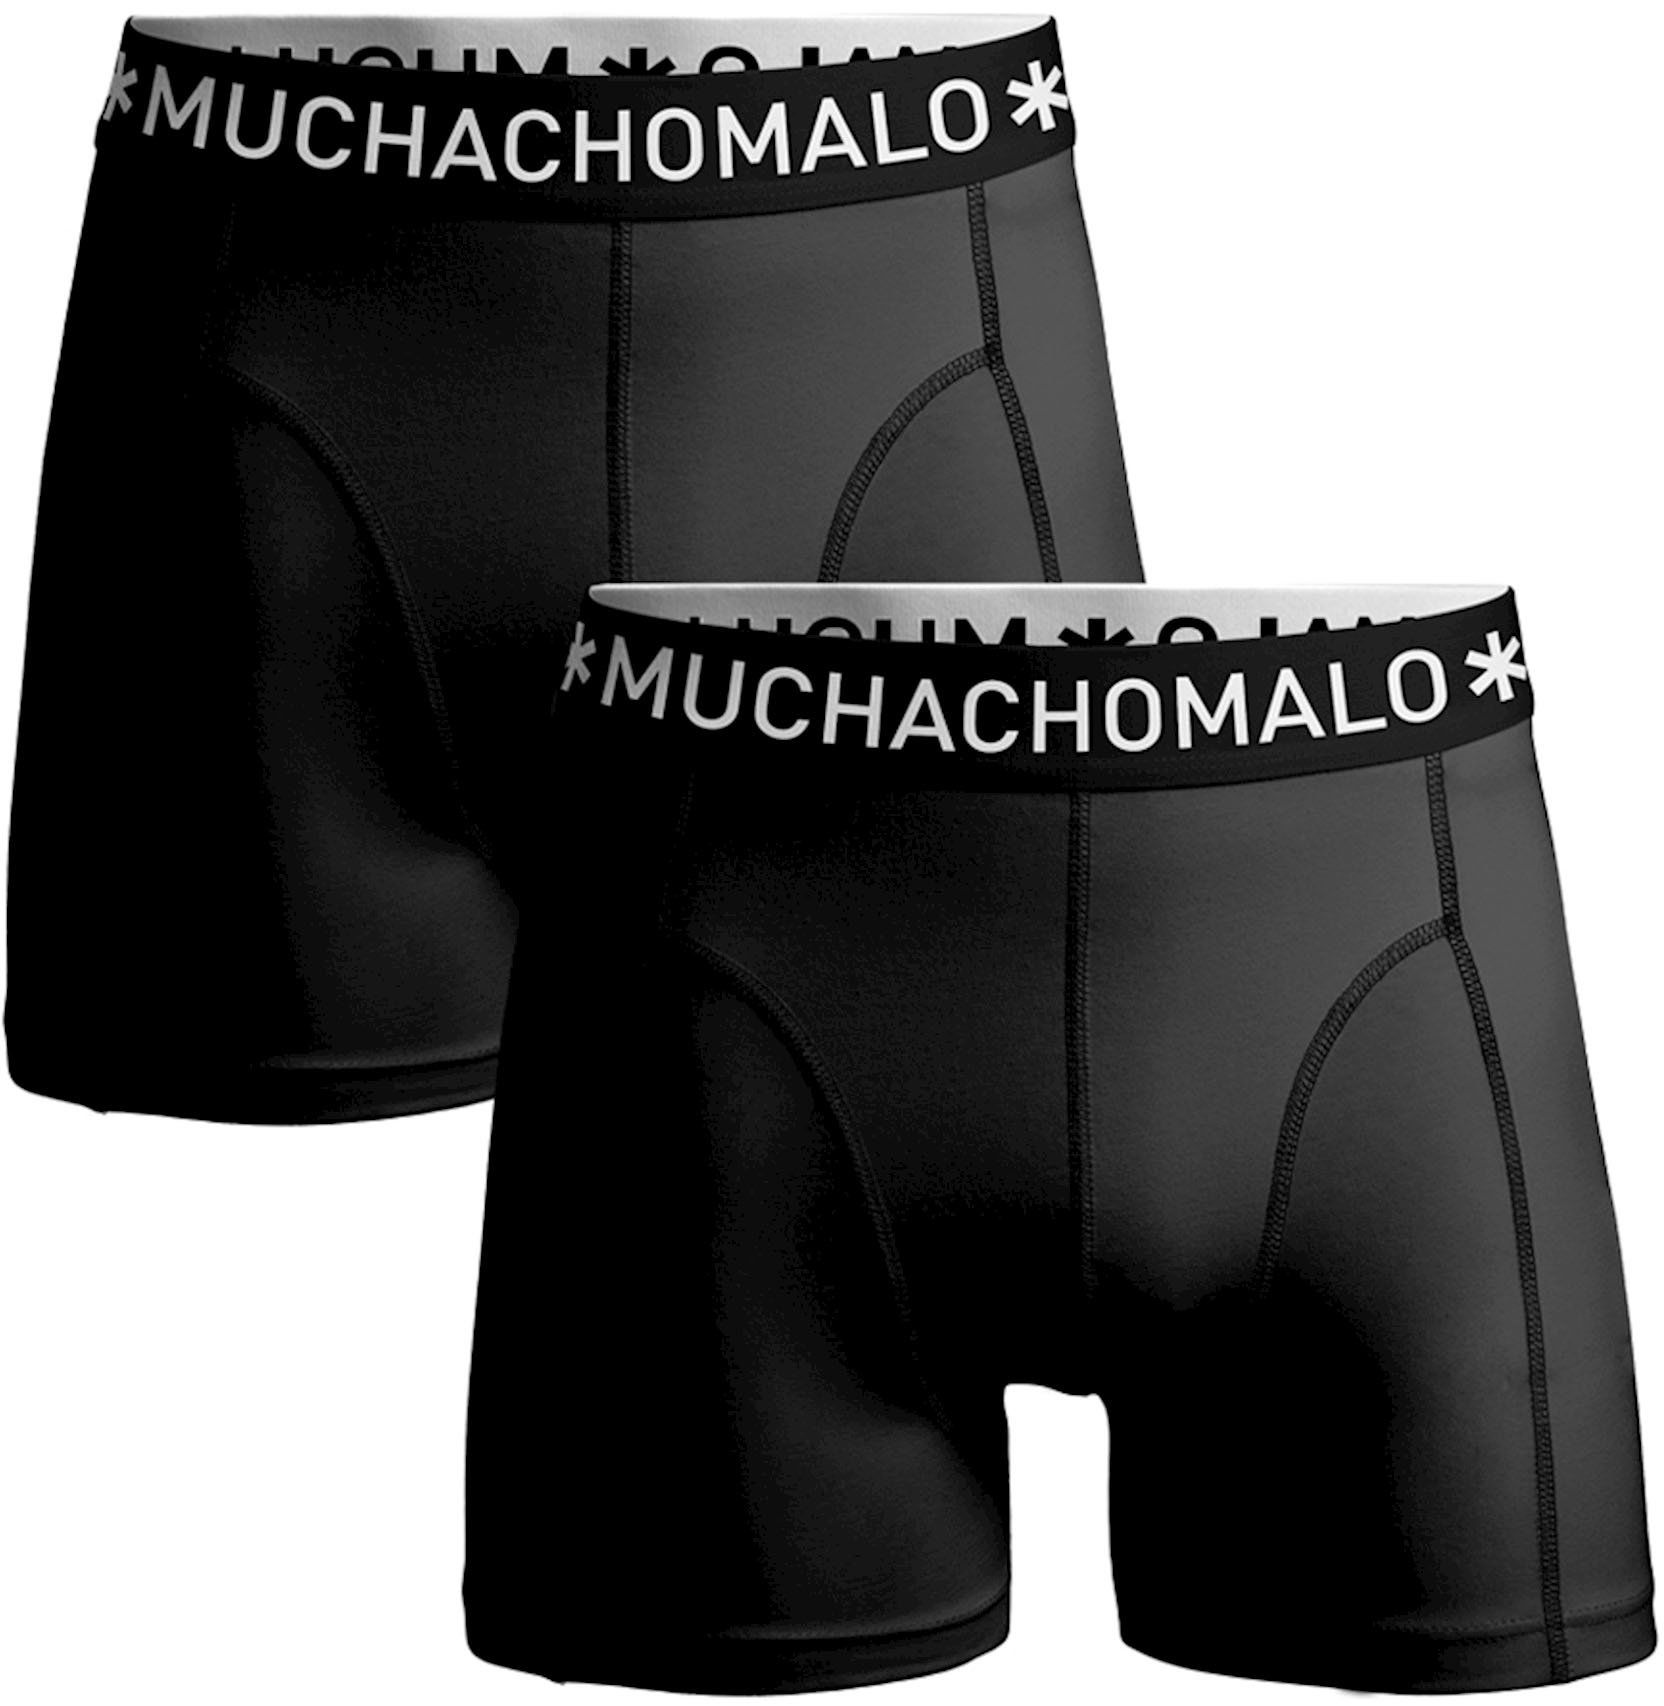 Muchachomalo Boxershorts 2-Pack Microfiber Black size XXL